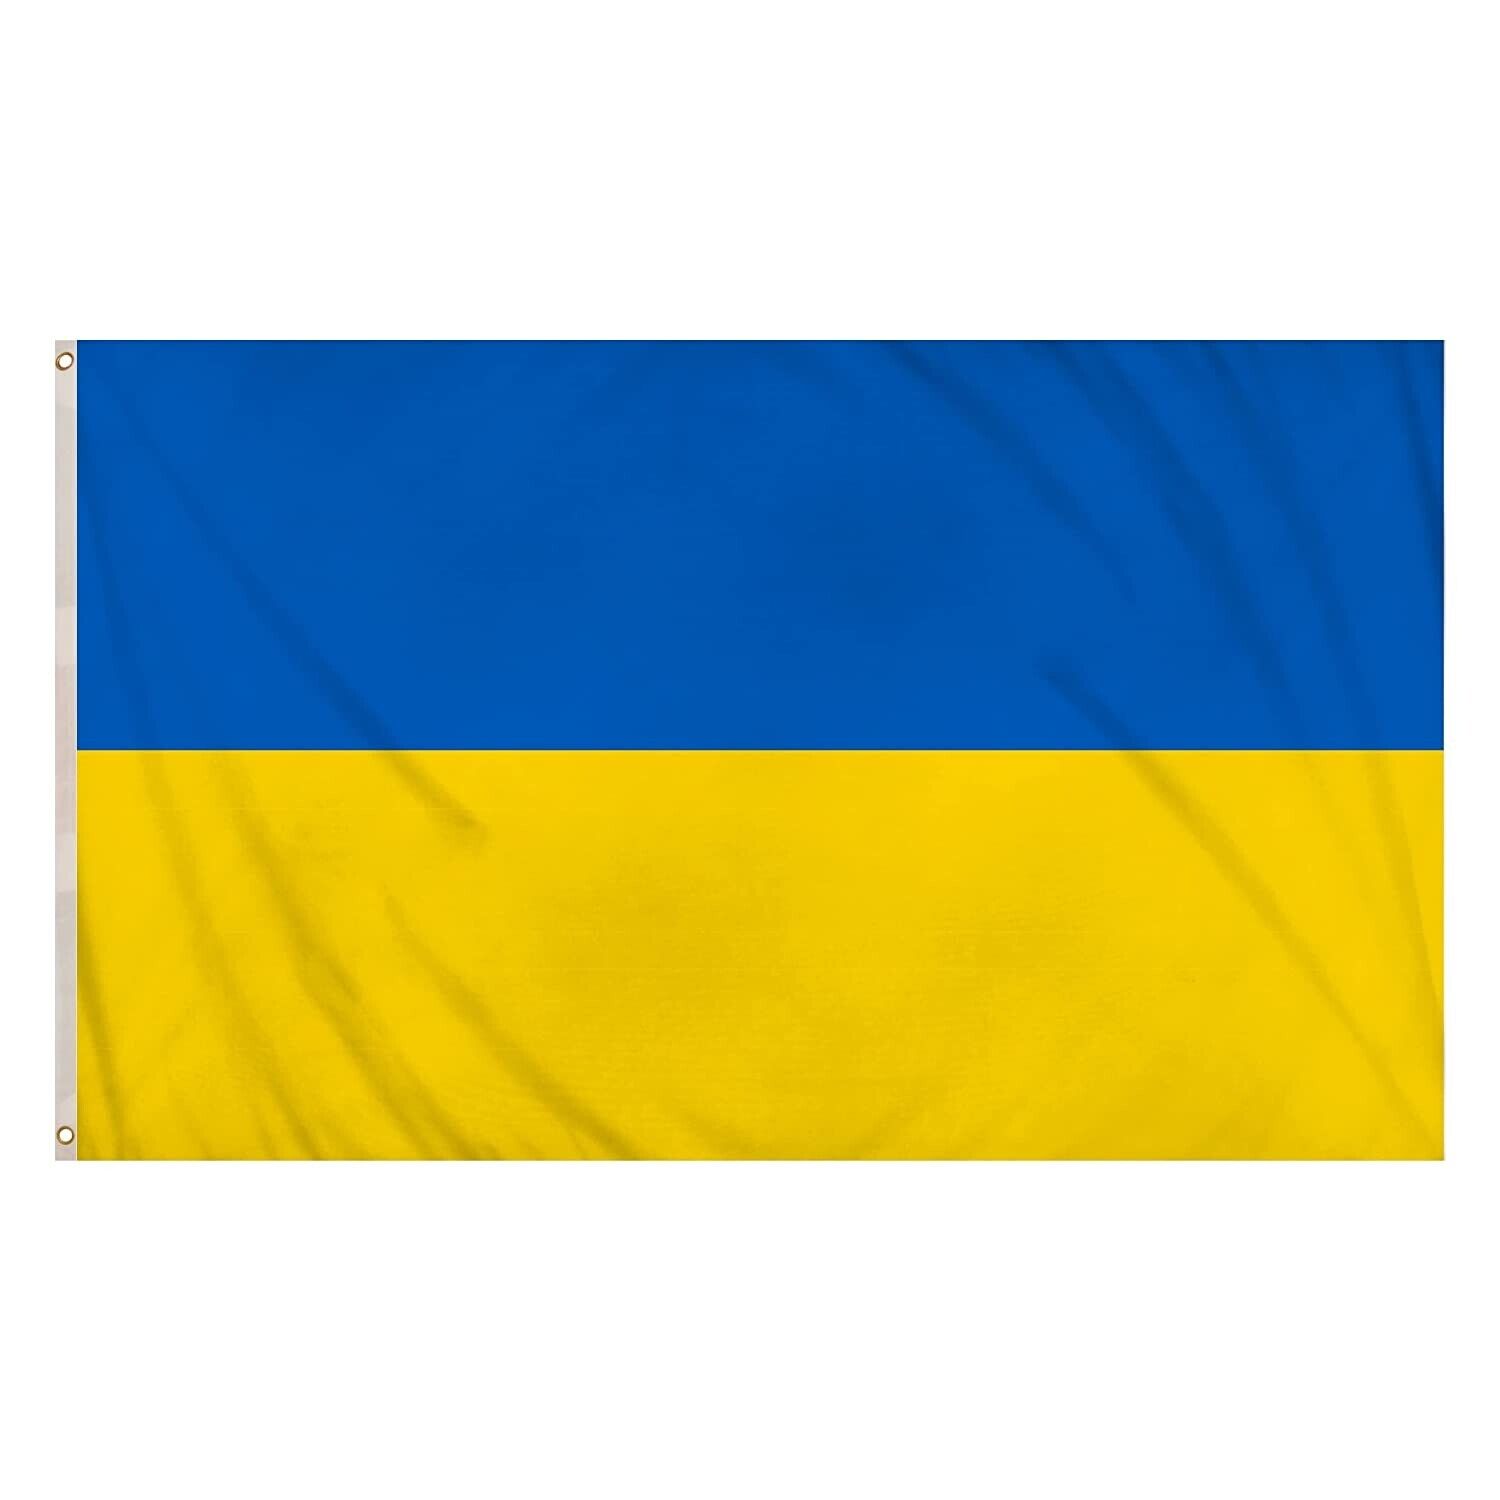 LARGE 5FT X 3FT UKRAINE FLAG UK UKRAINIAN RUSSIA WAR NATIONAL BRASS EYELETS